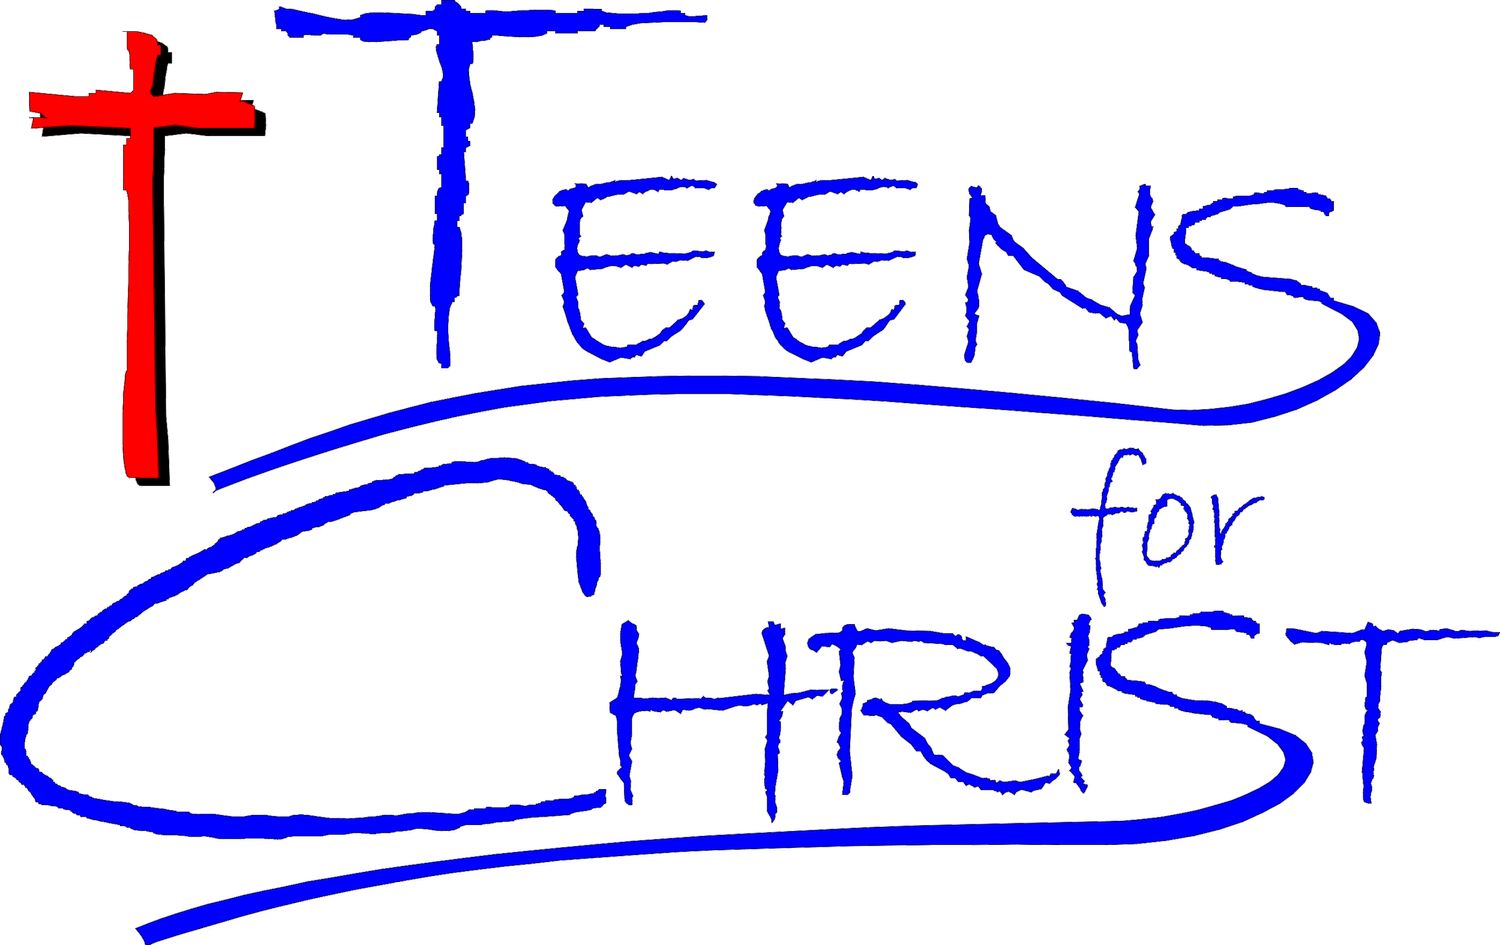 Teens For Christ